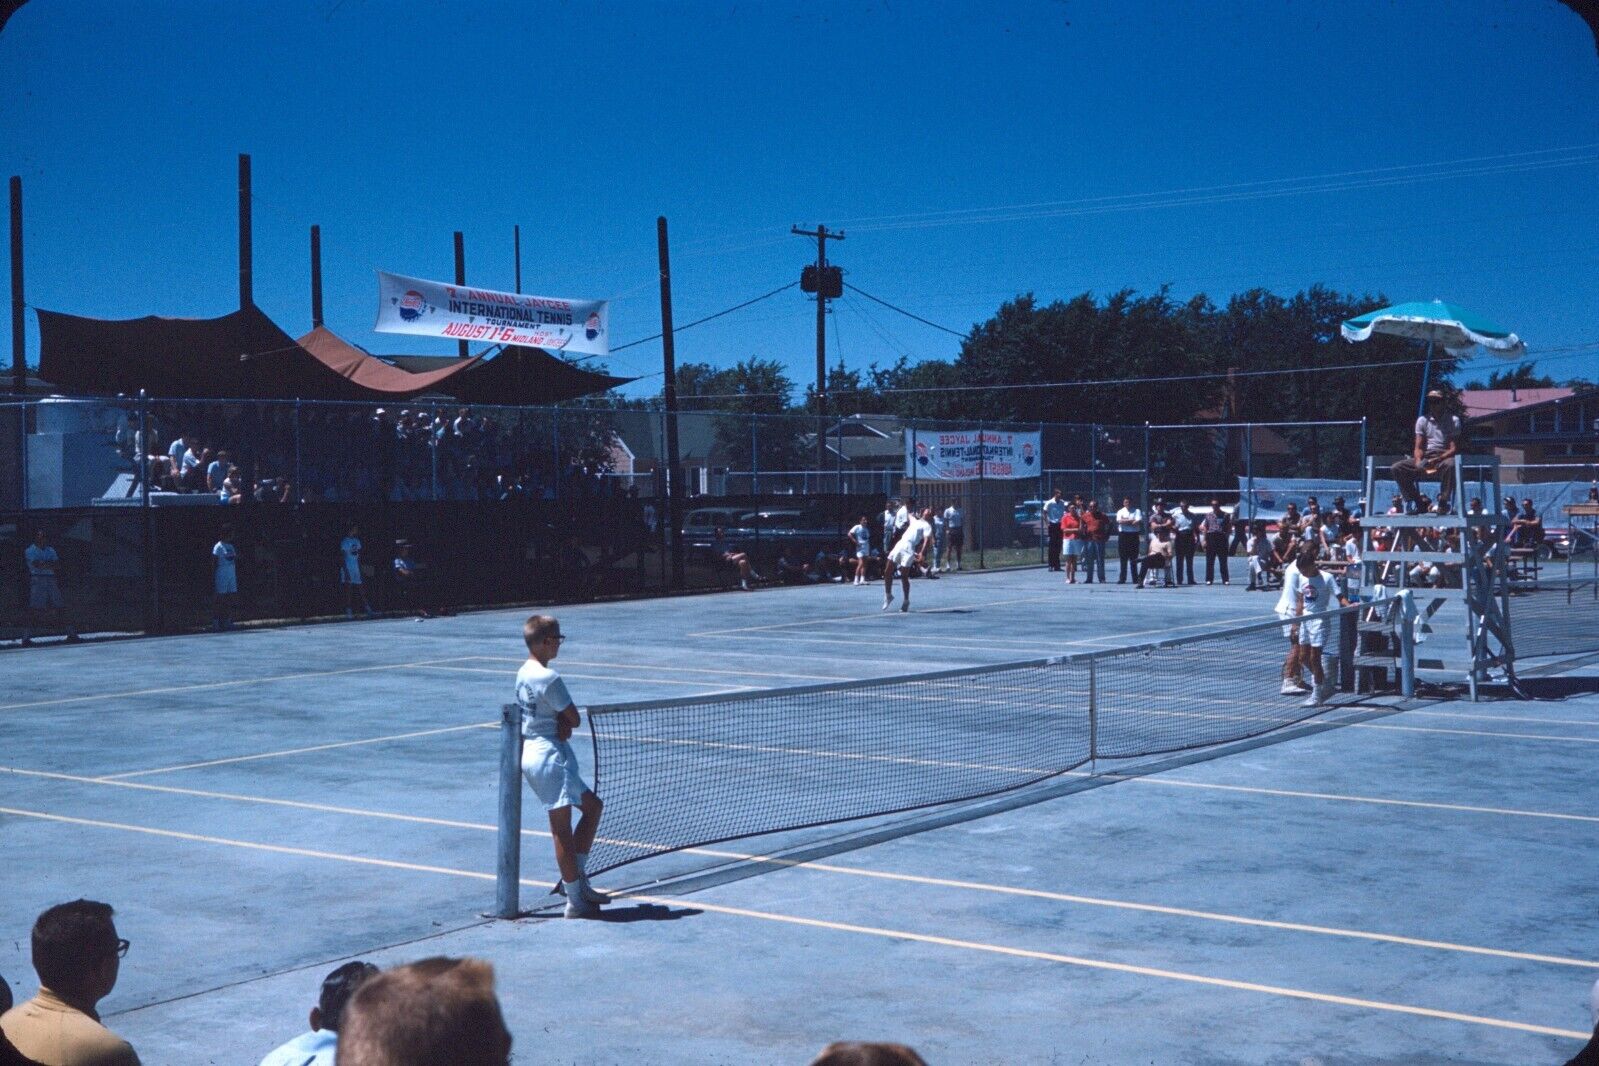 1960 Jaycee International Tennis Tournament Midland Texas August #2 35mm Slide